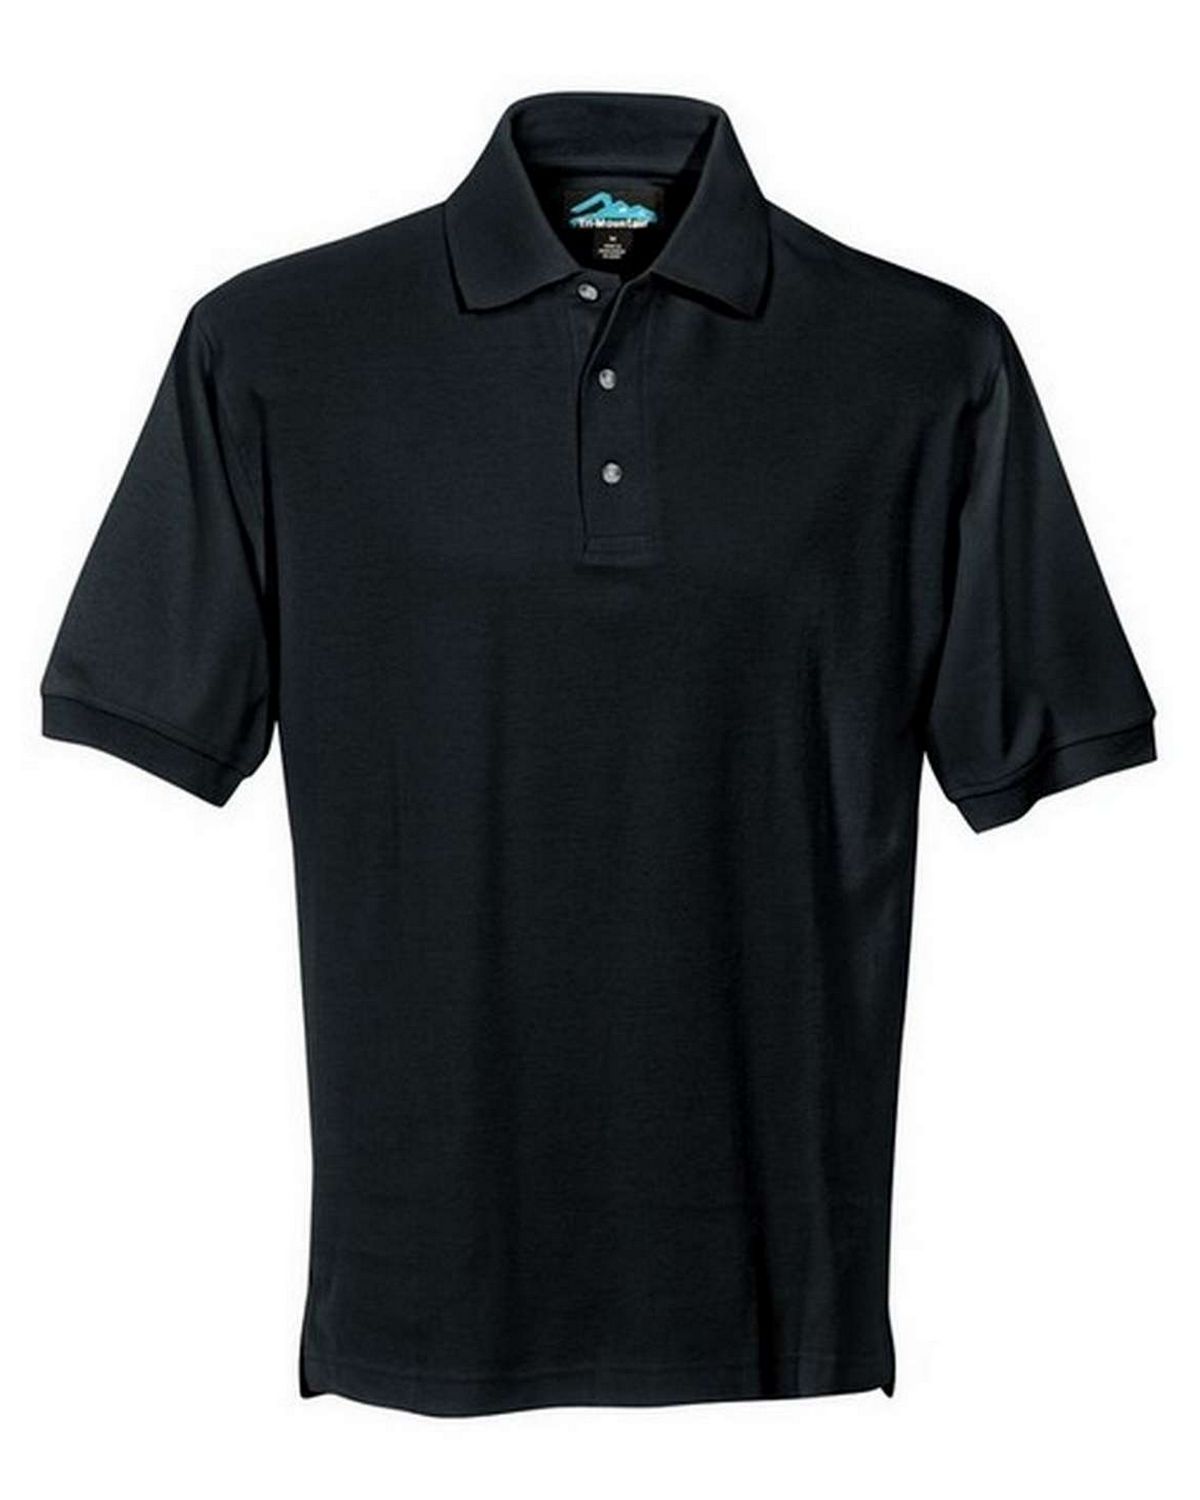 Tri-Mountain 168 Signature Cotton Pique Golf Shirt